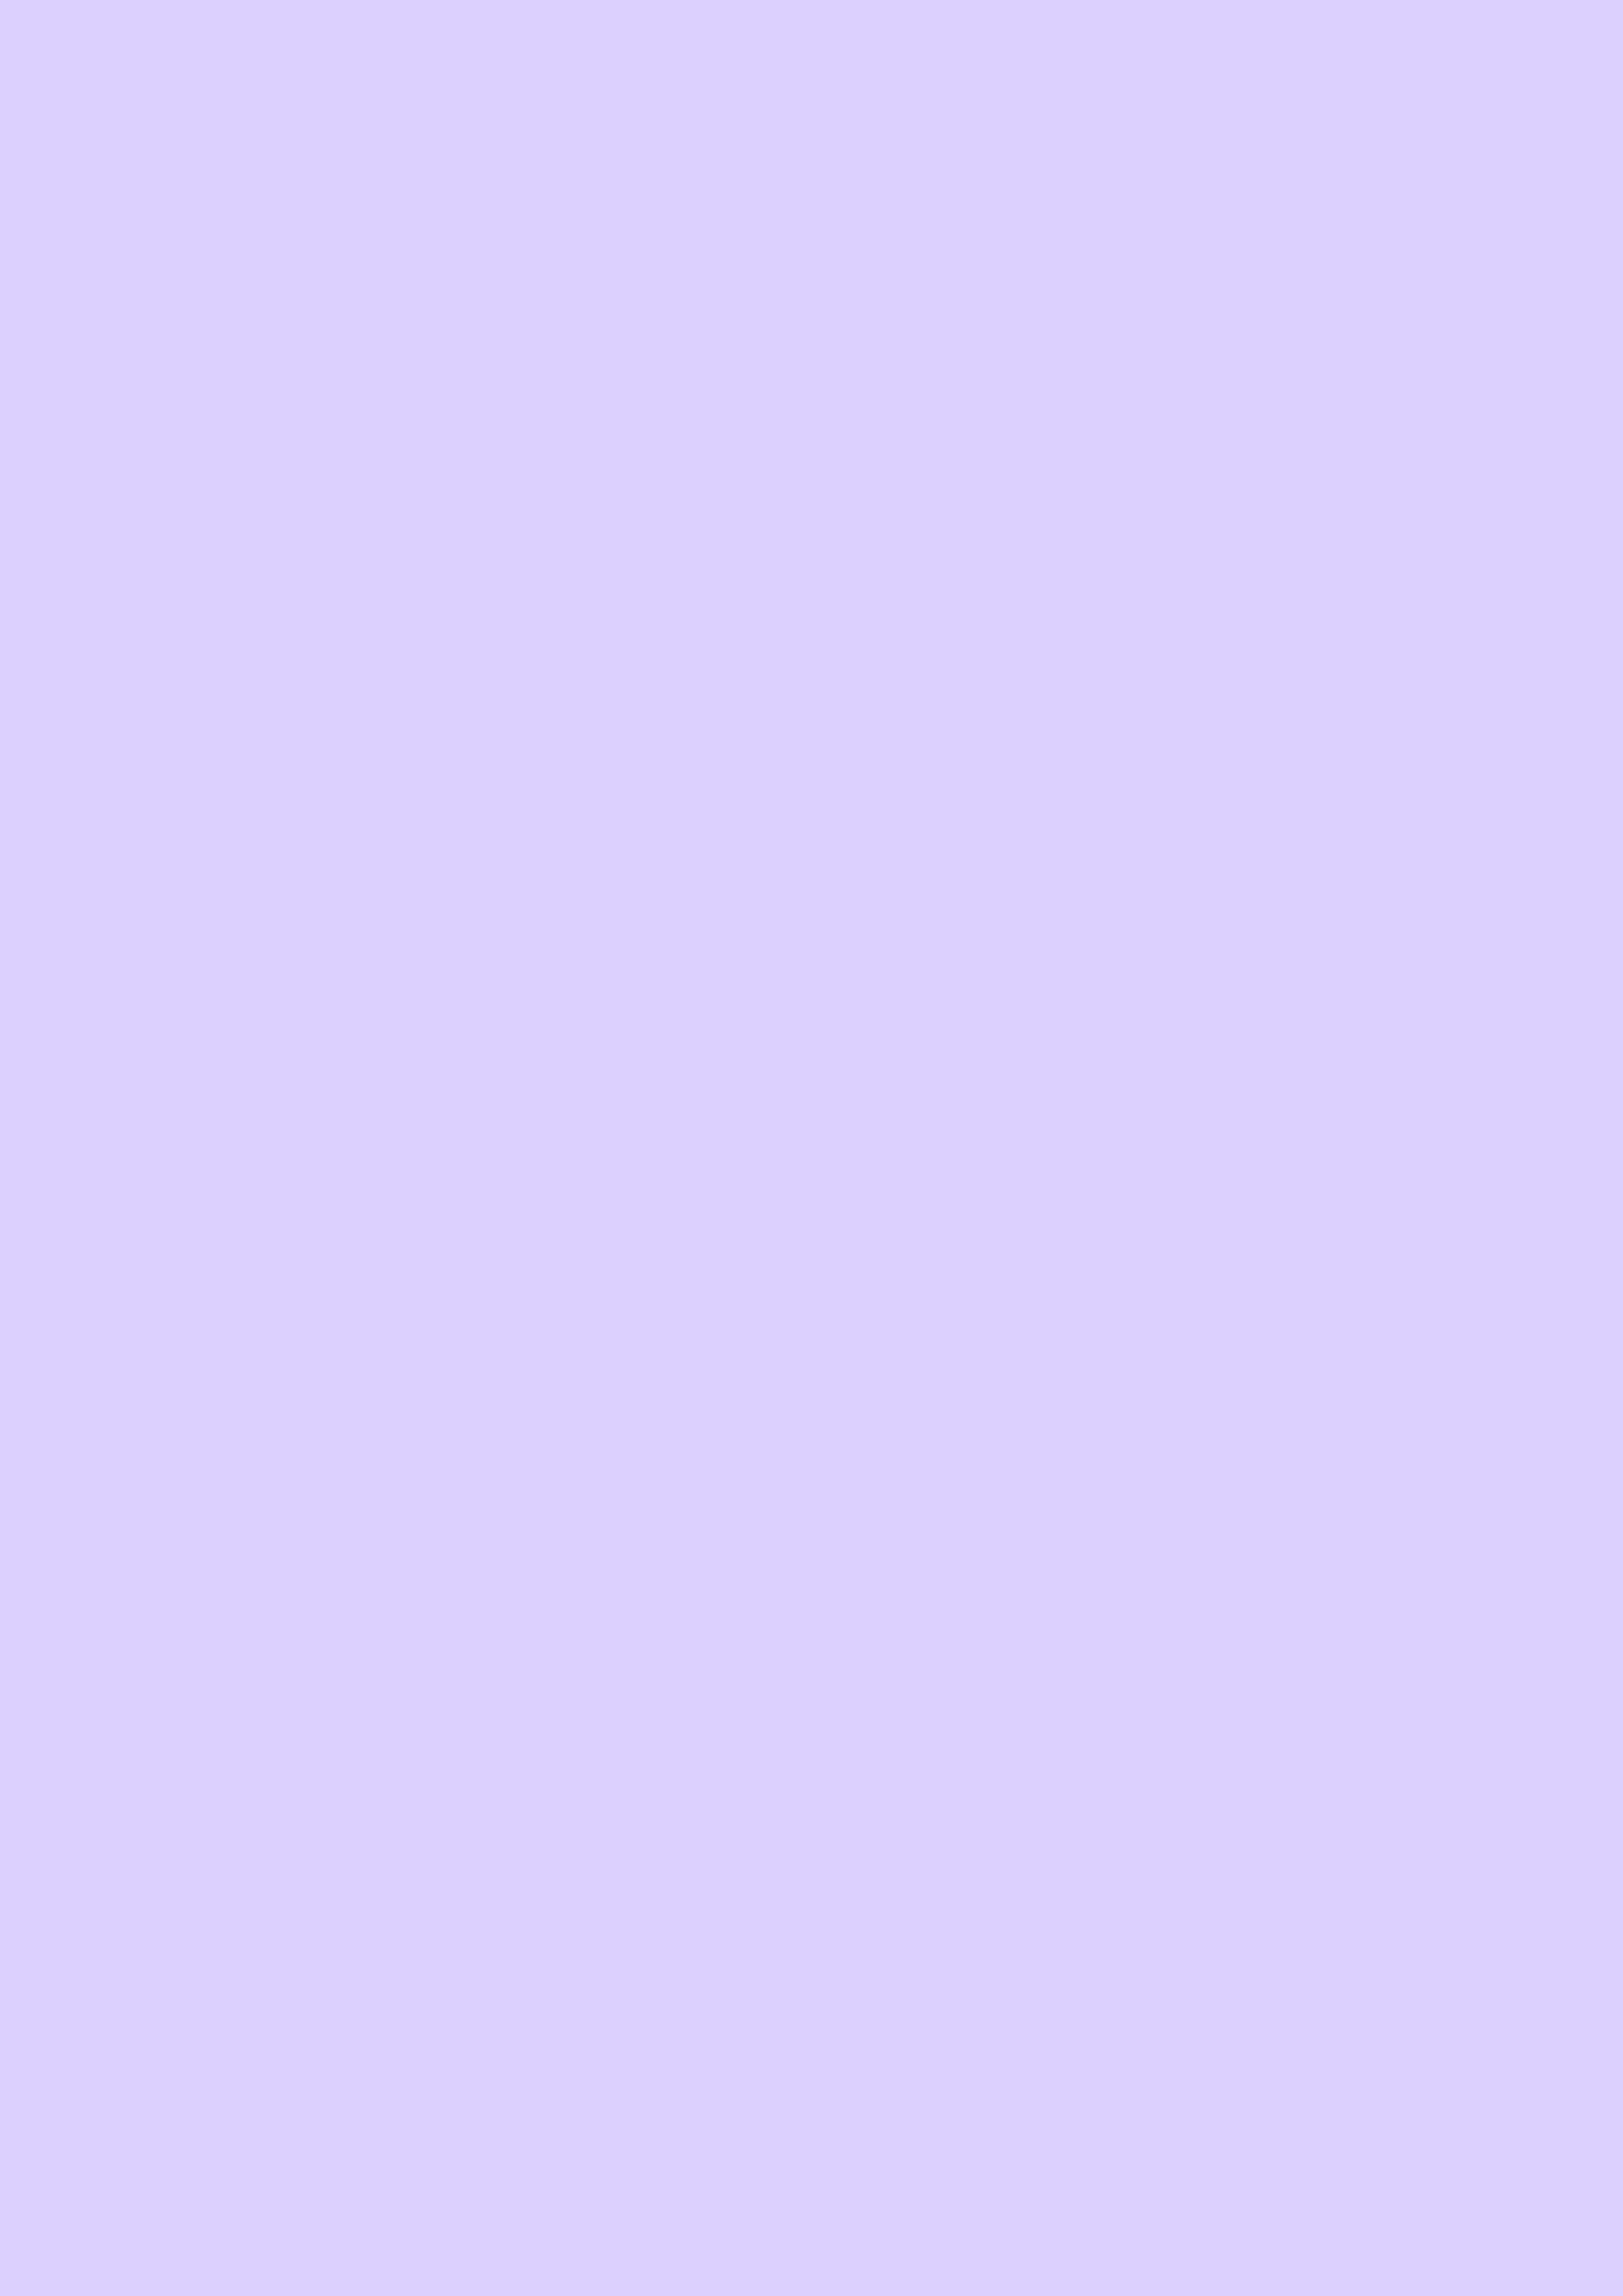 2480x3508 Pale Lavender Solid Color Background